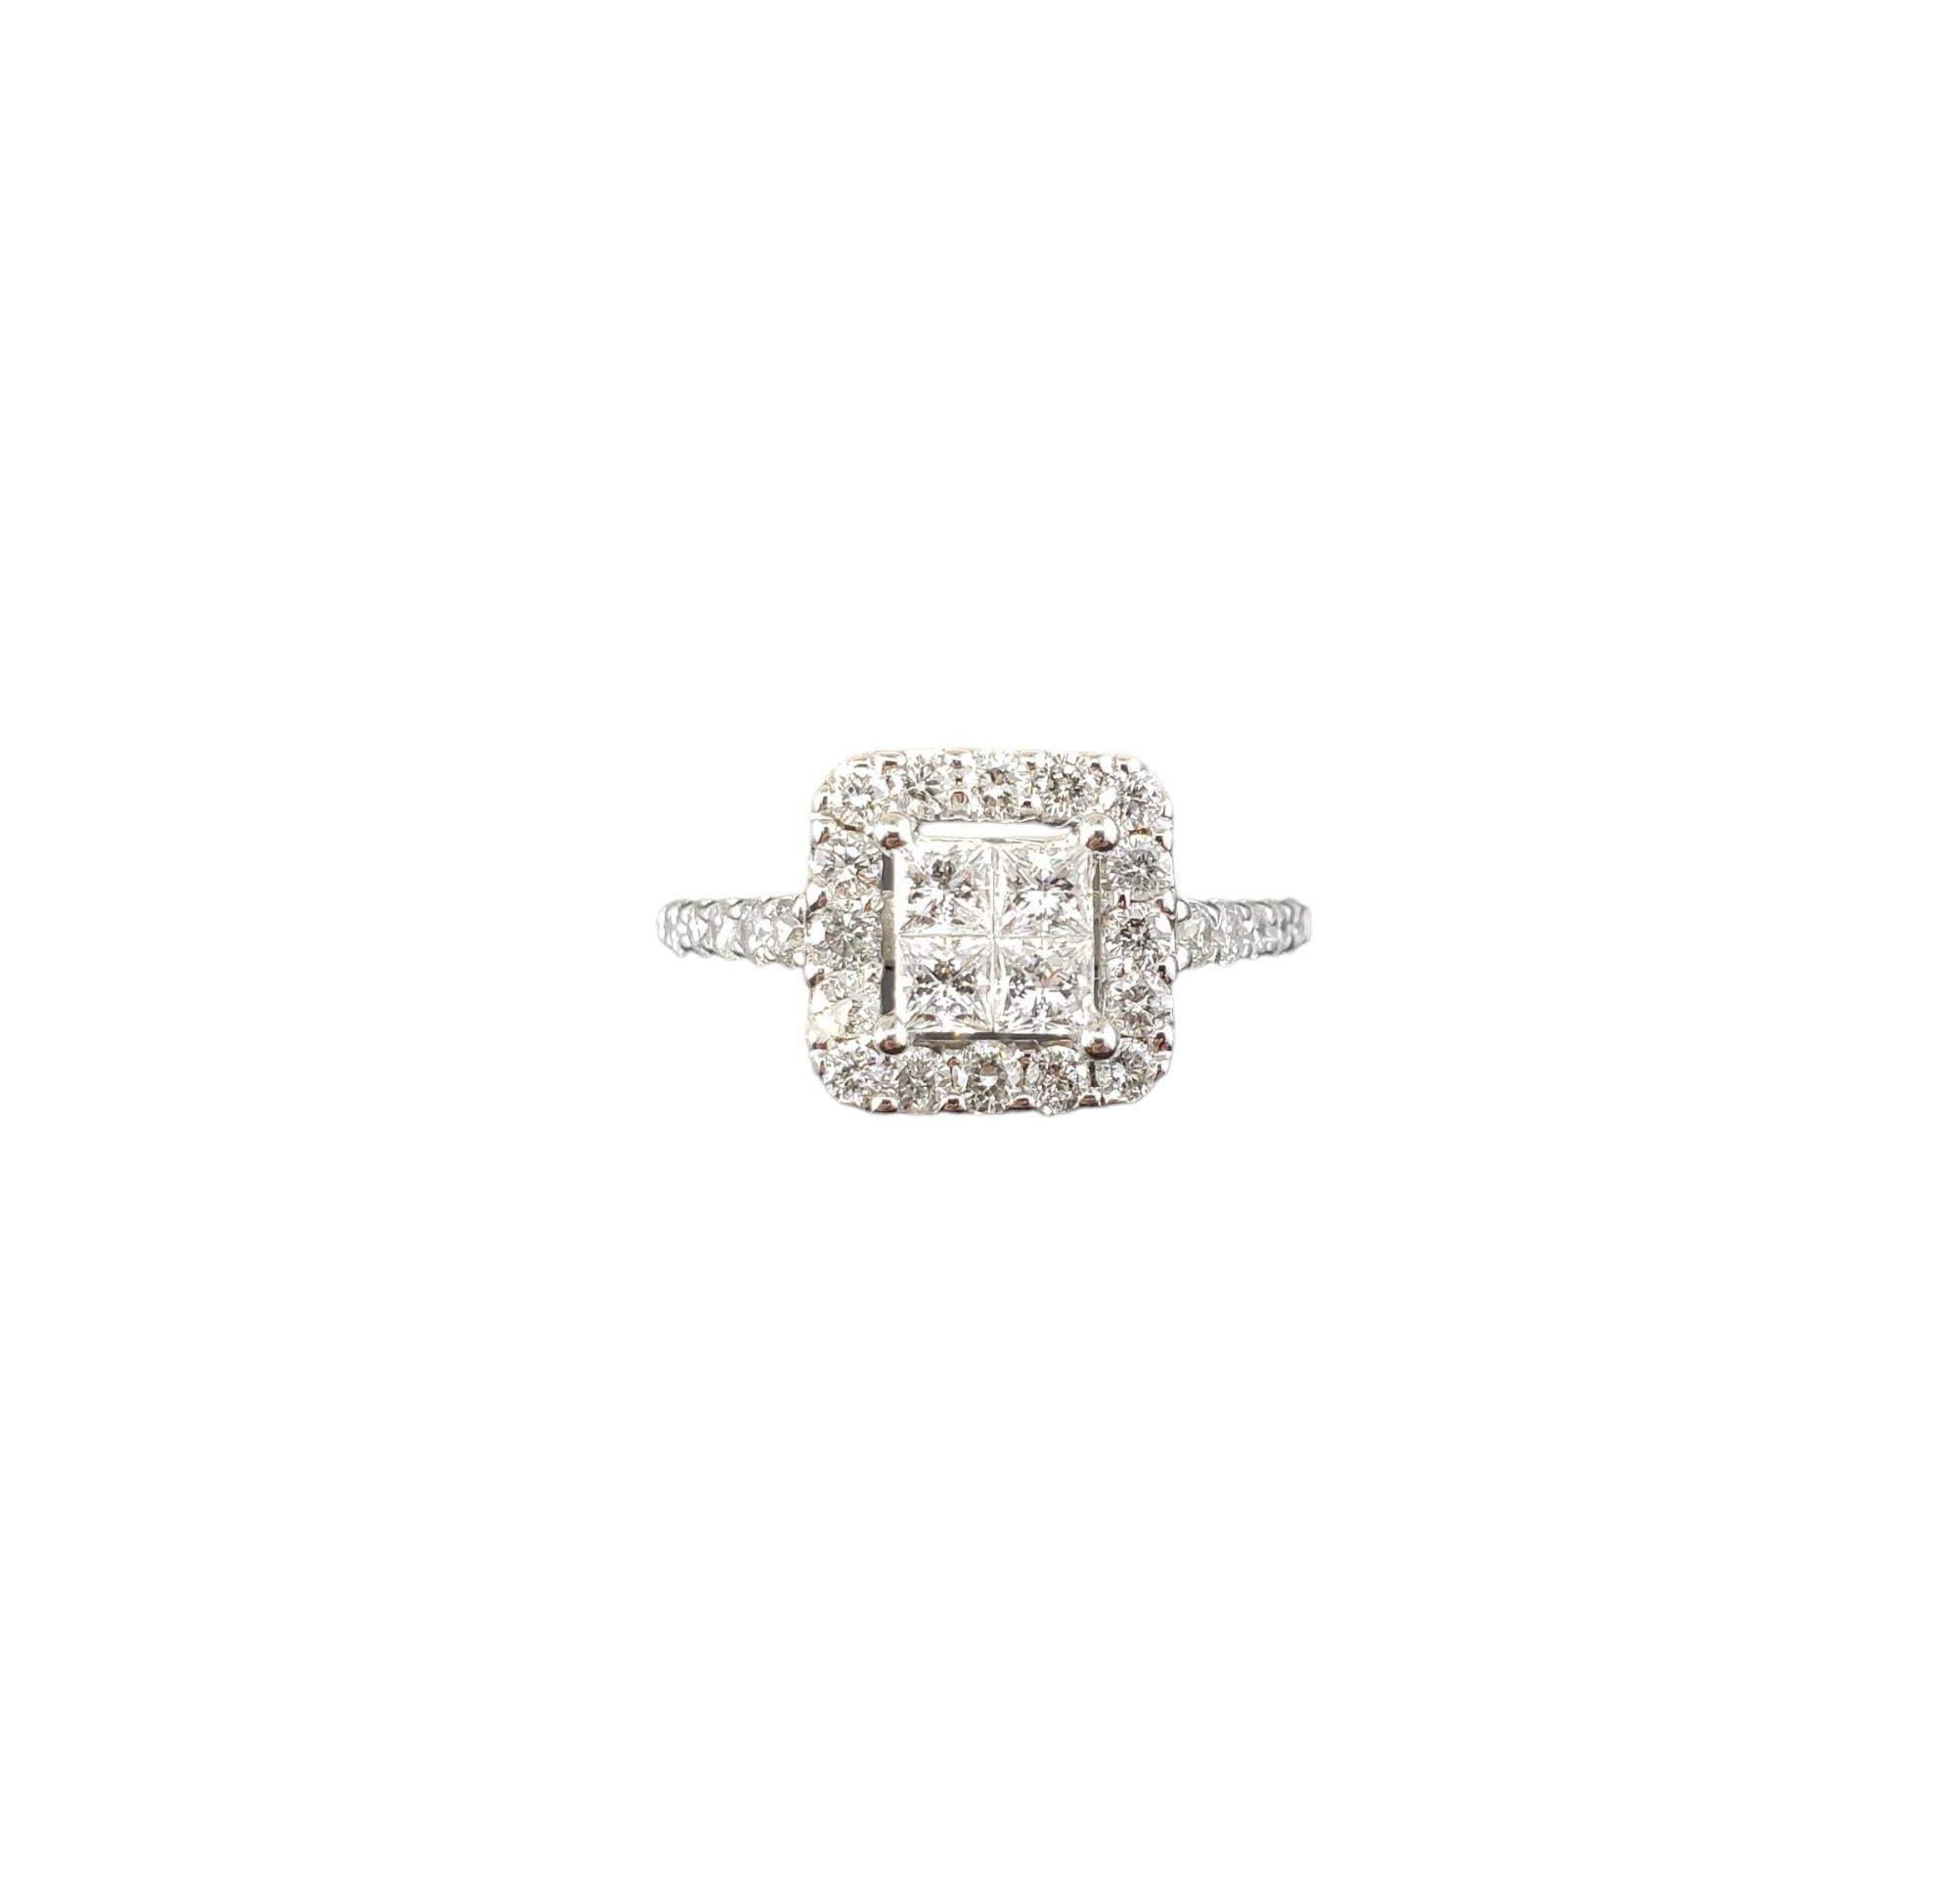 14K White Gold Diamond Cluster Engagement Ring Size 5.5-5.75 #16338